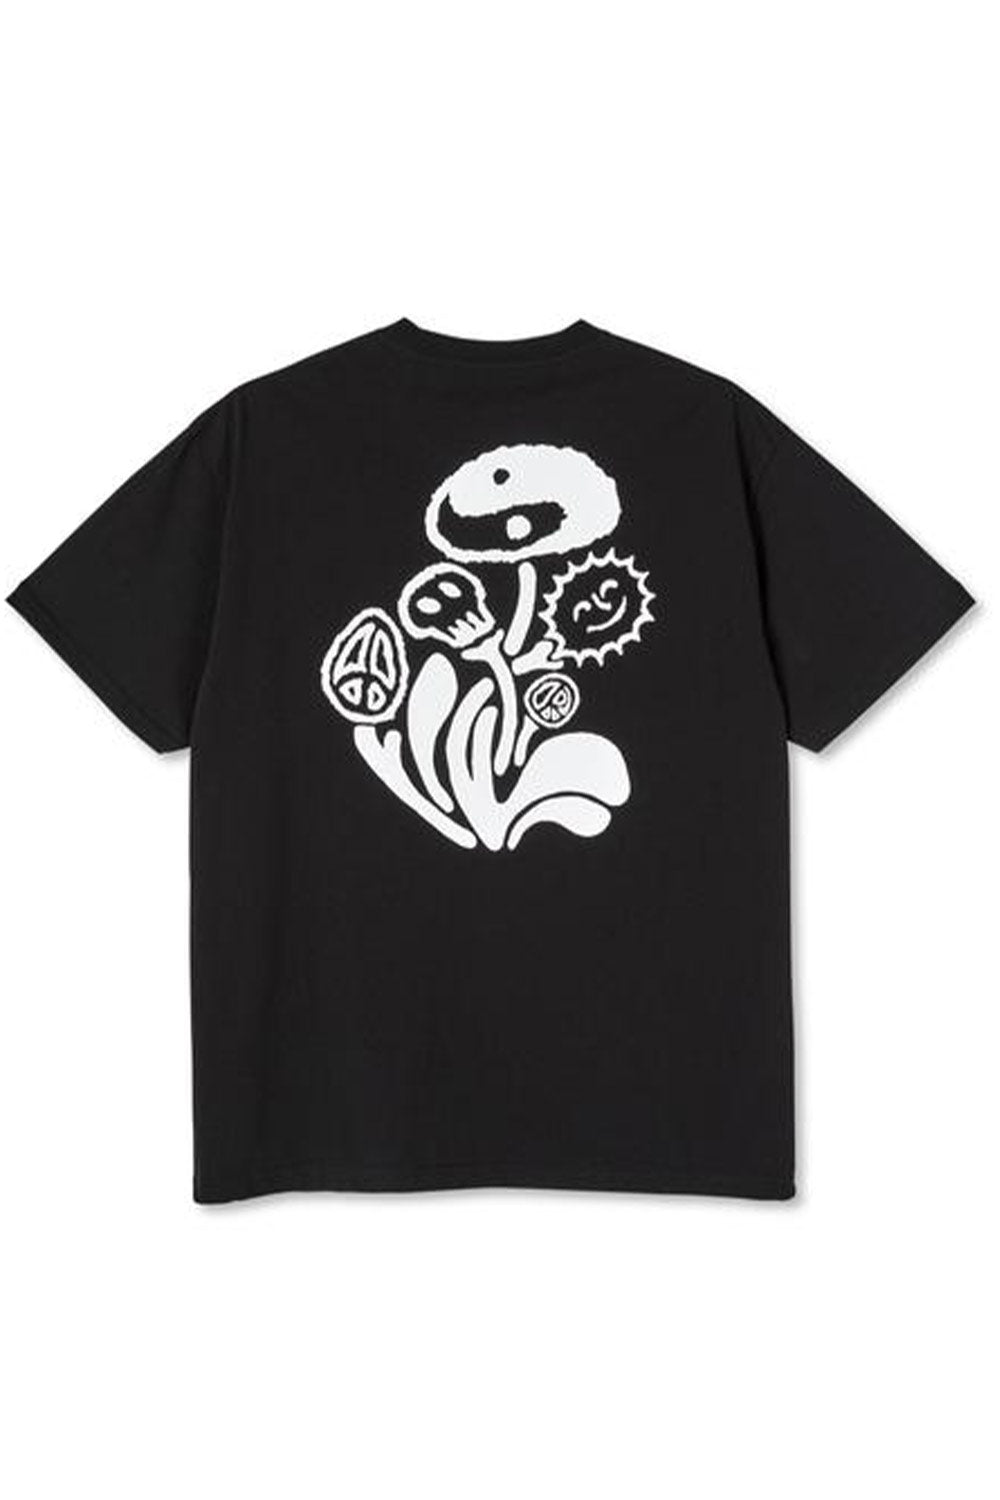 Polar Skate Co Trippin' T-Shirt